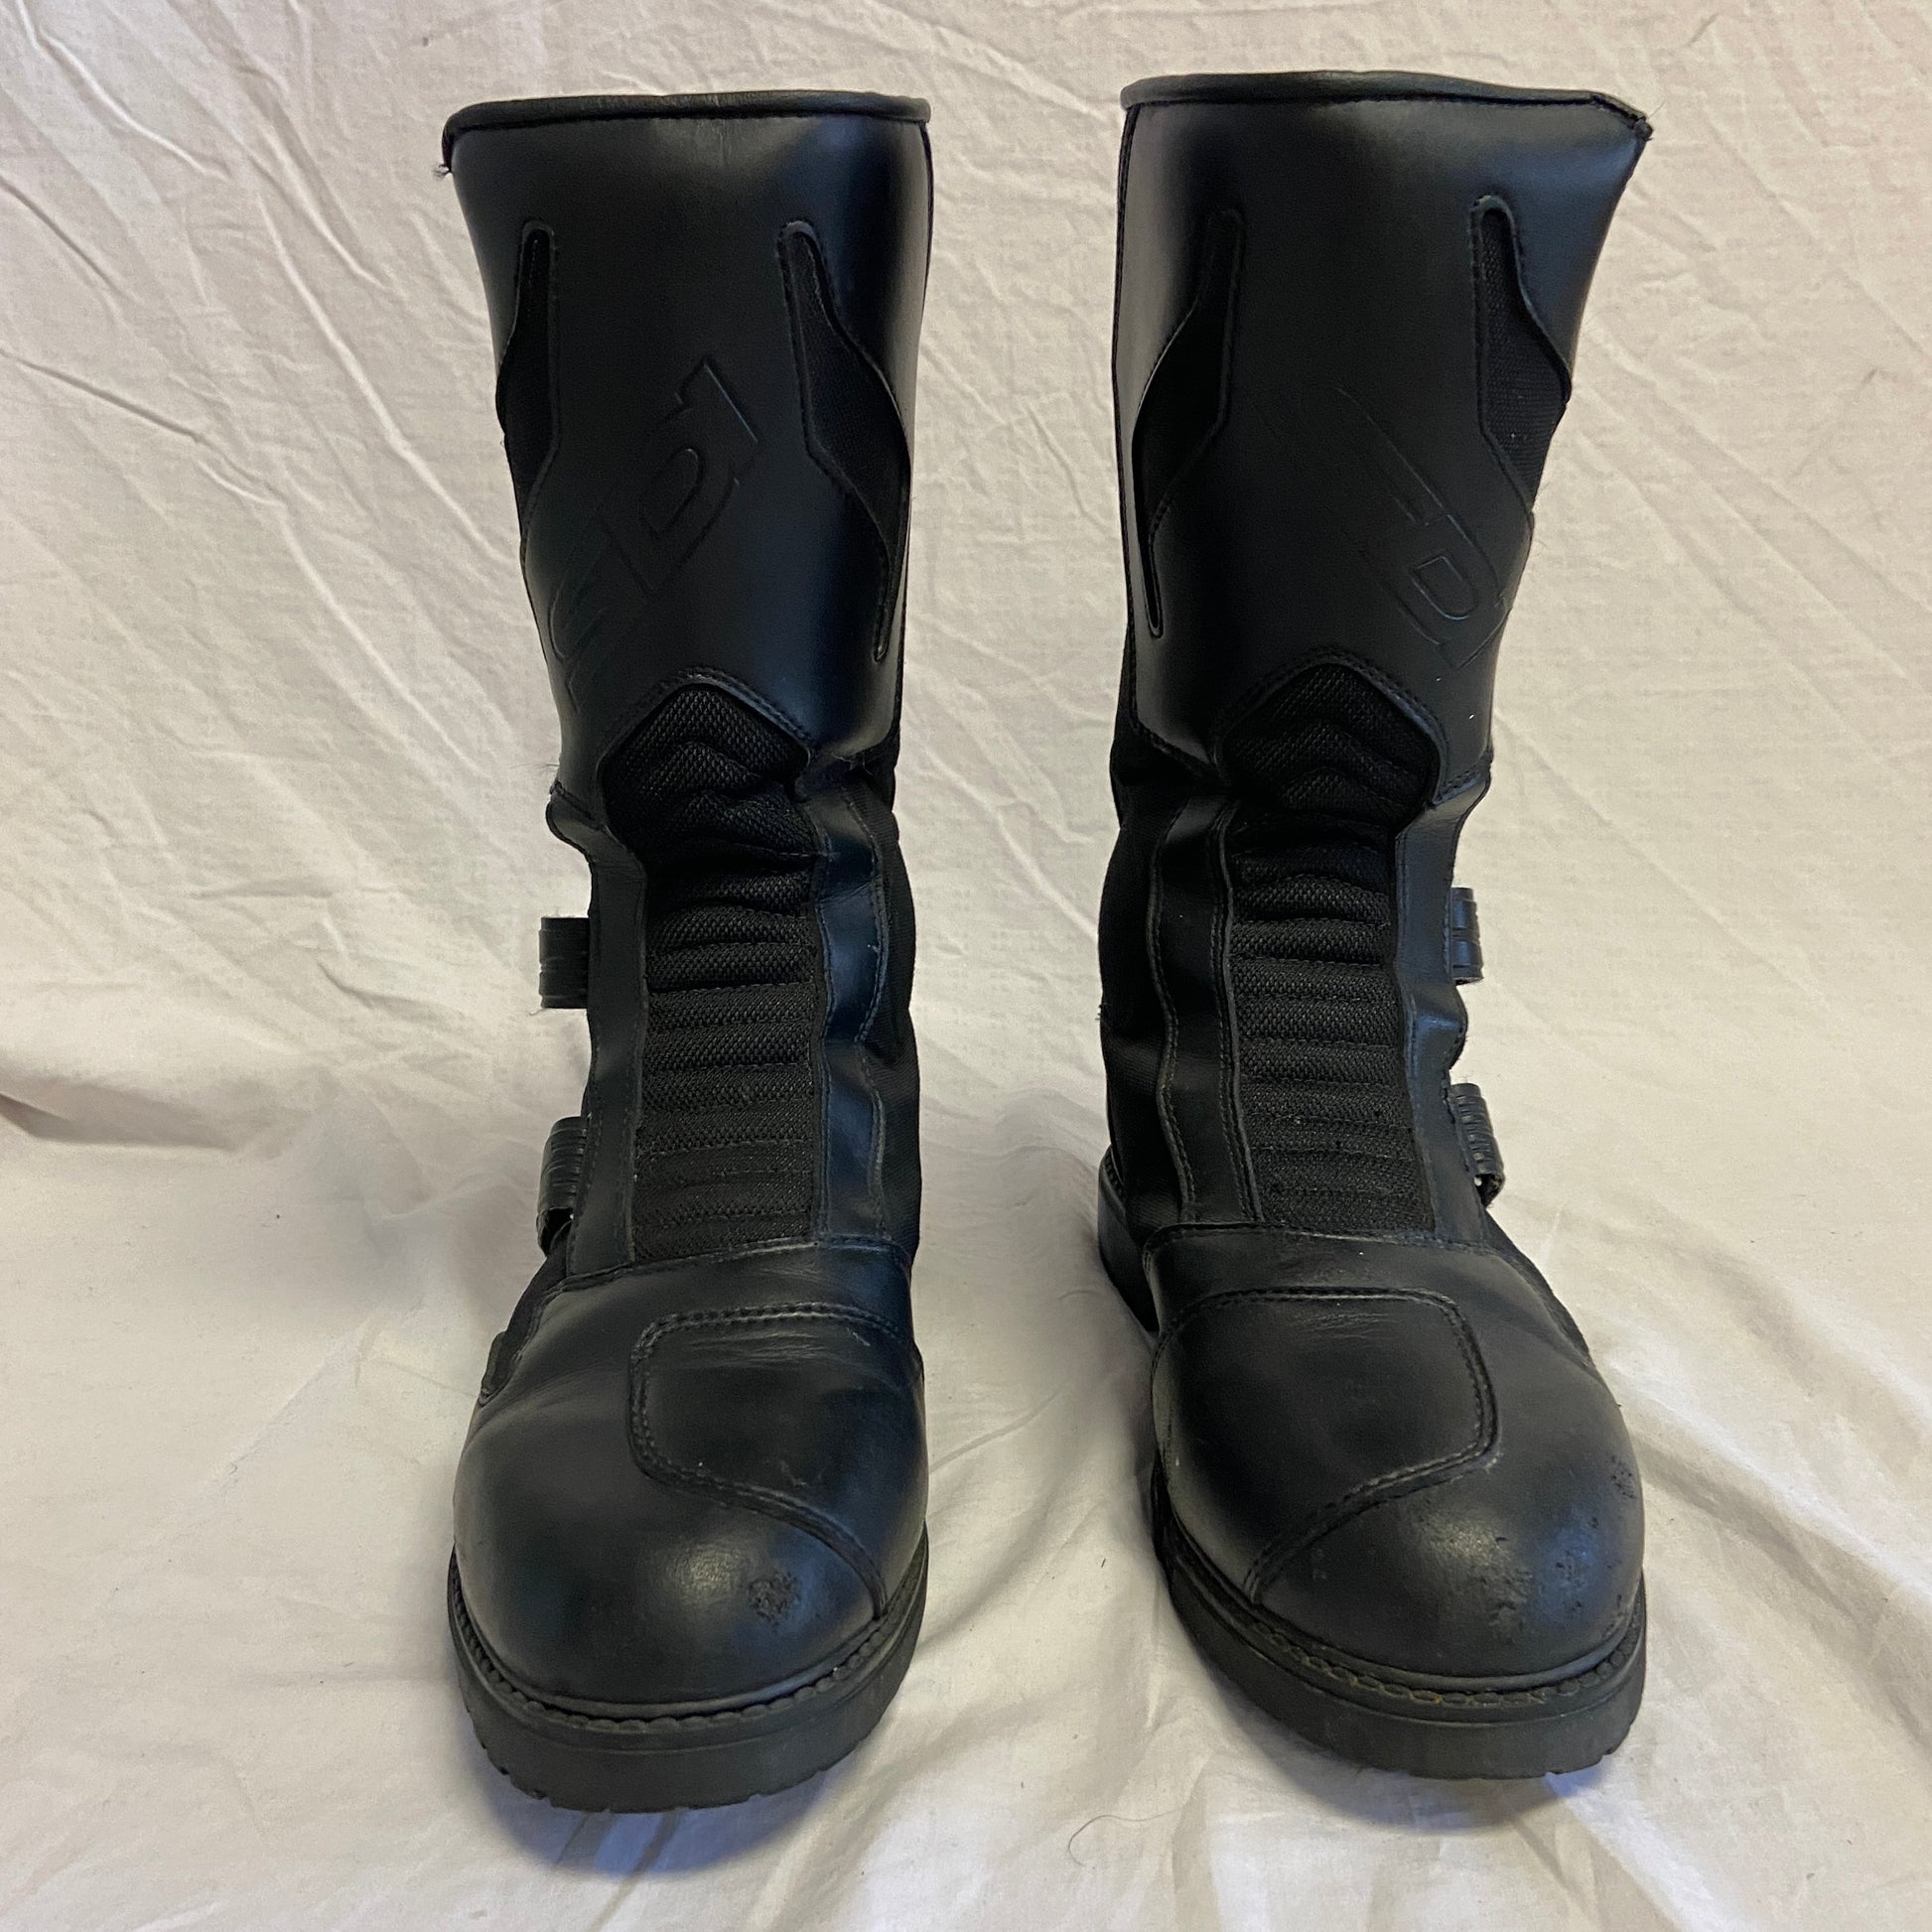 Sidi All Road Gore-Tex Boots Black 45 EU / 11 US (Used) - ExtremeSupply.com